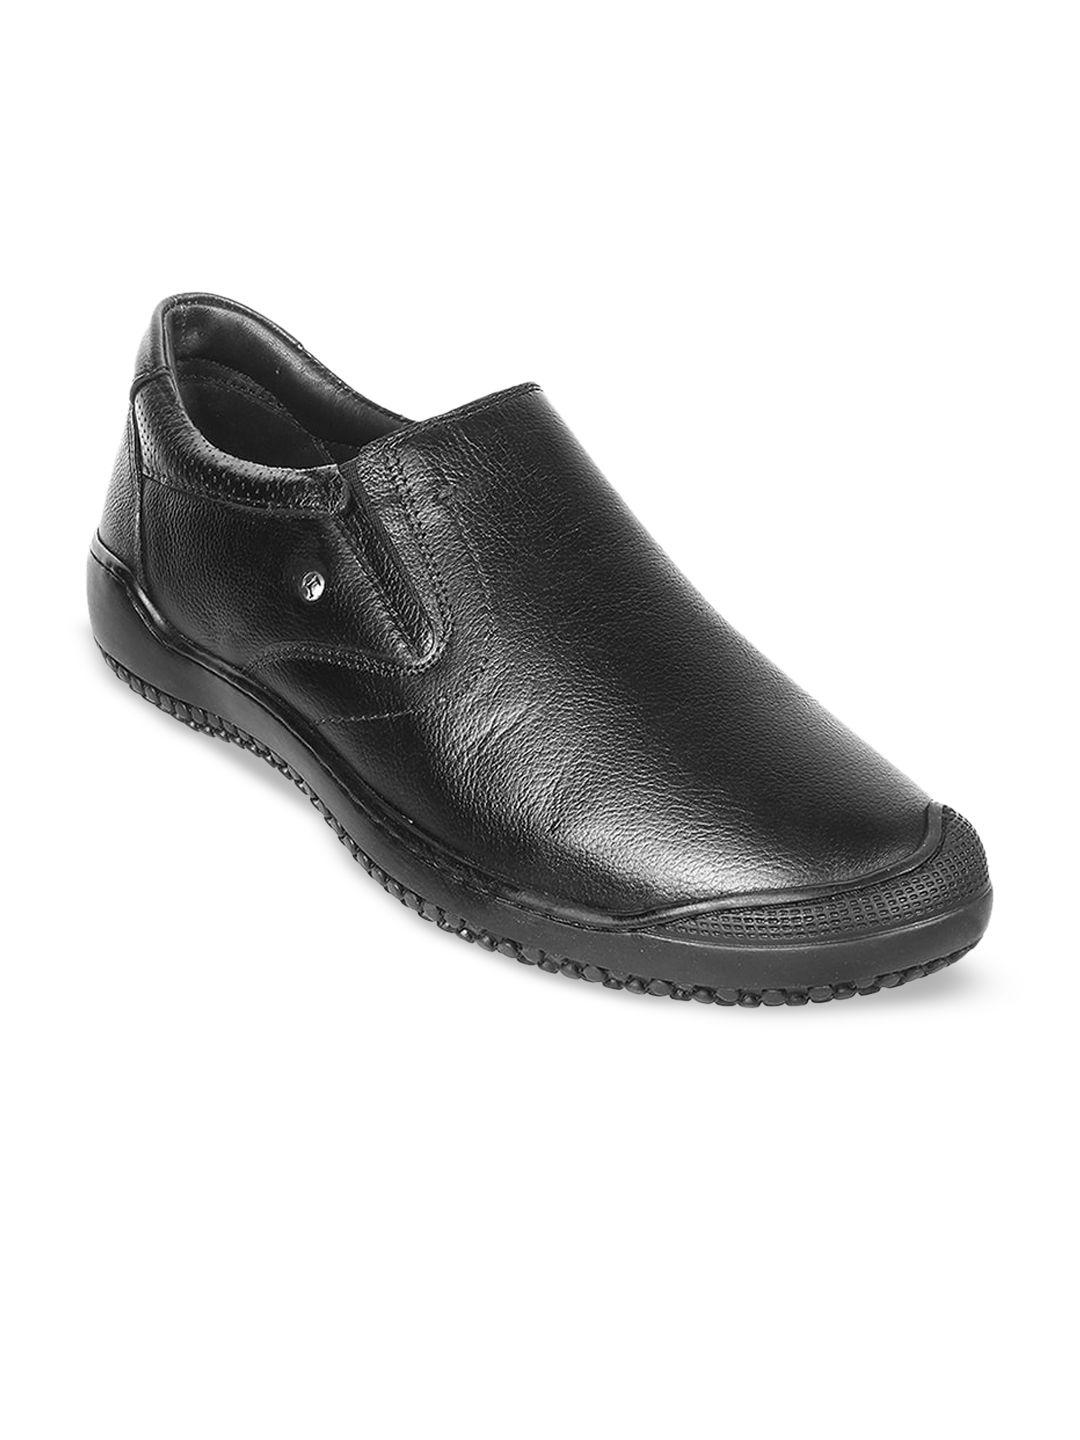 mochi men leather driving shoes